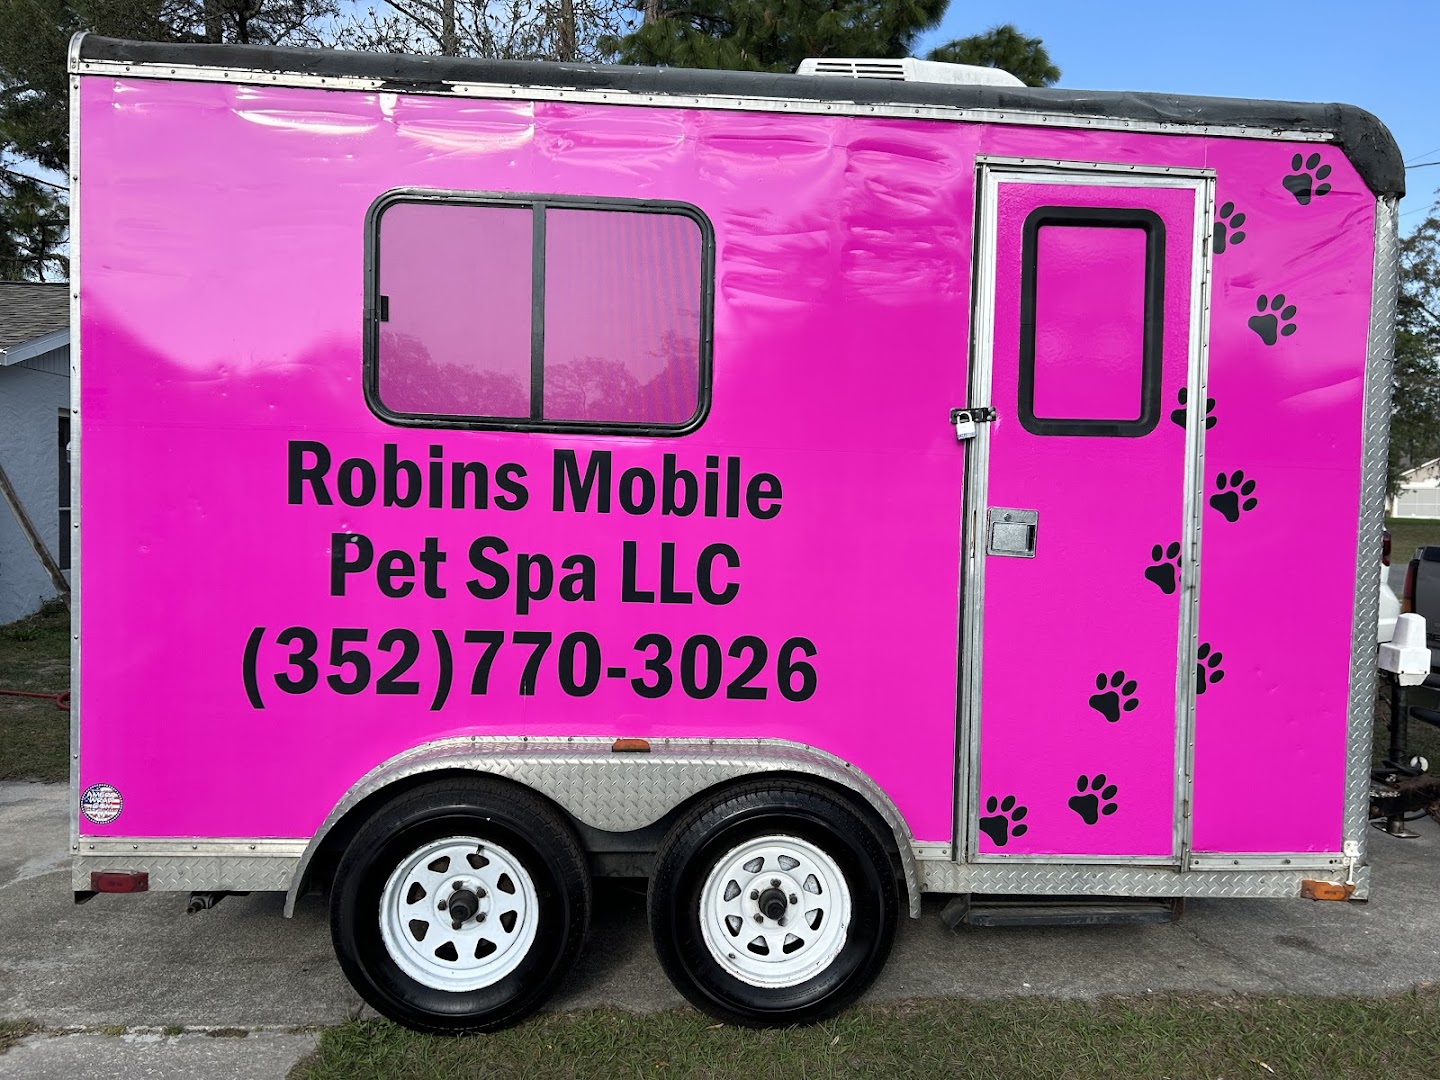 Robins Mobile Pet Spa LLC